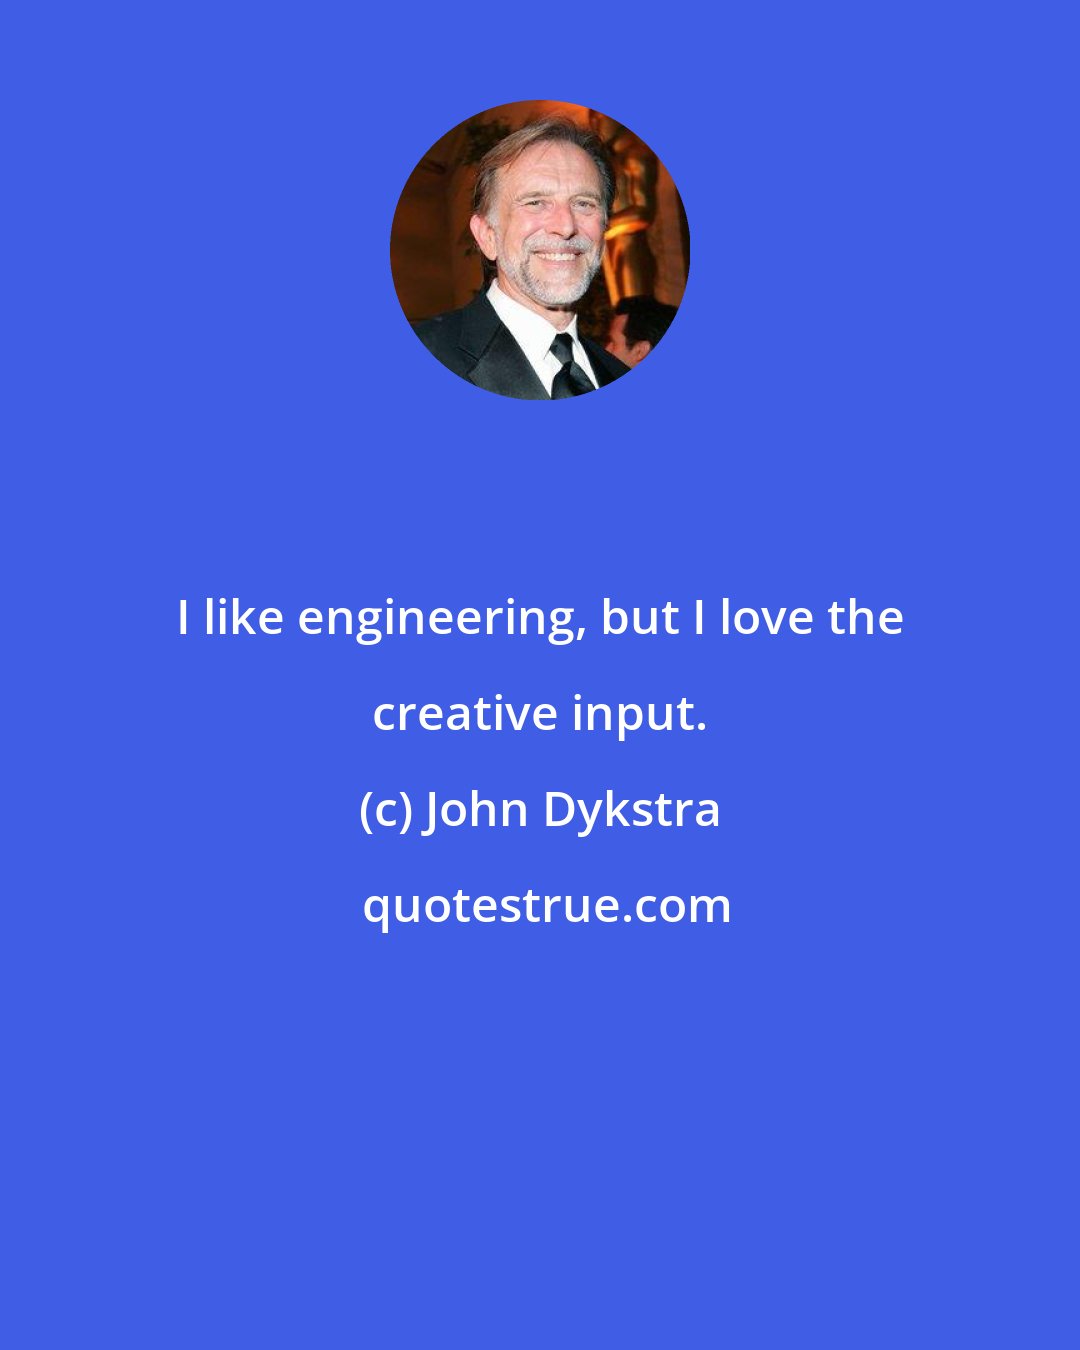 John Dykstra: I like engineering, but I love the creative input.